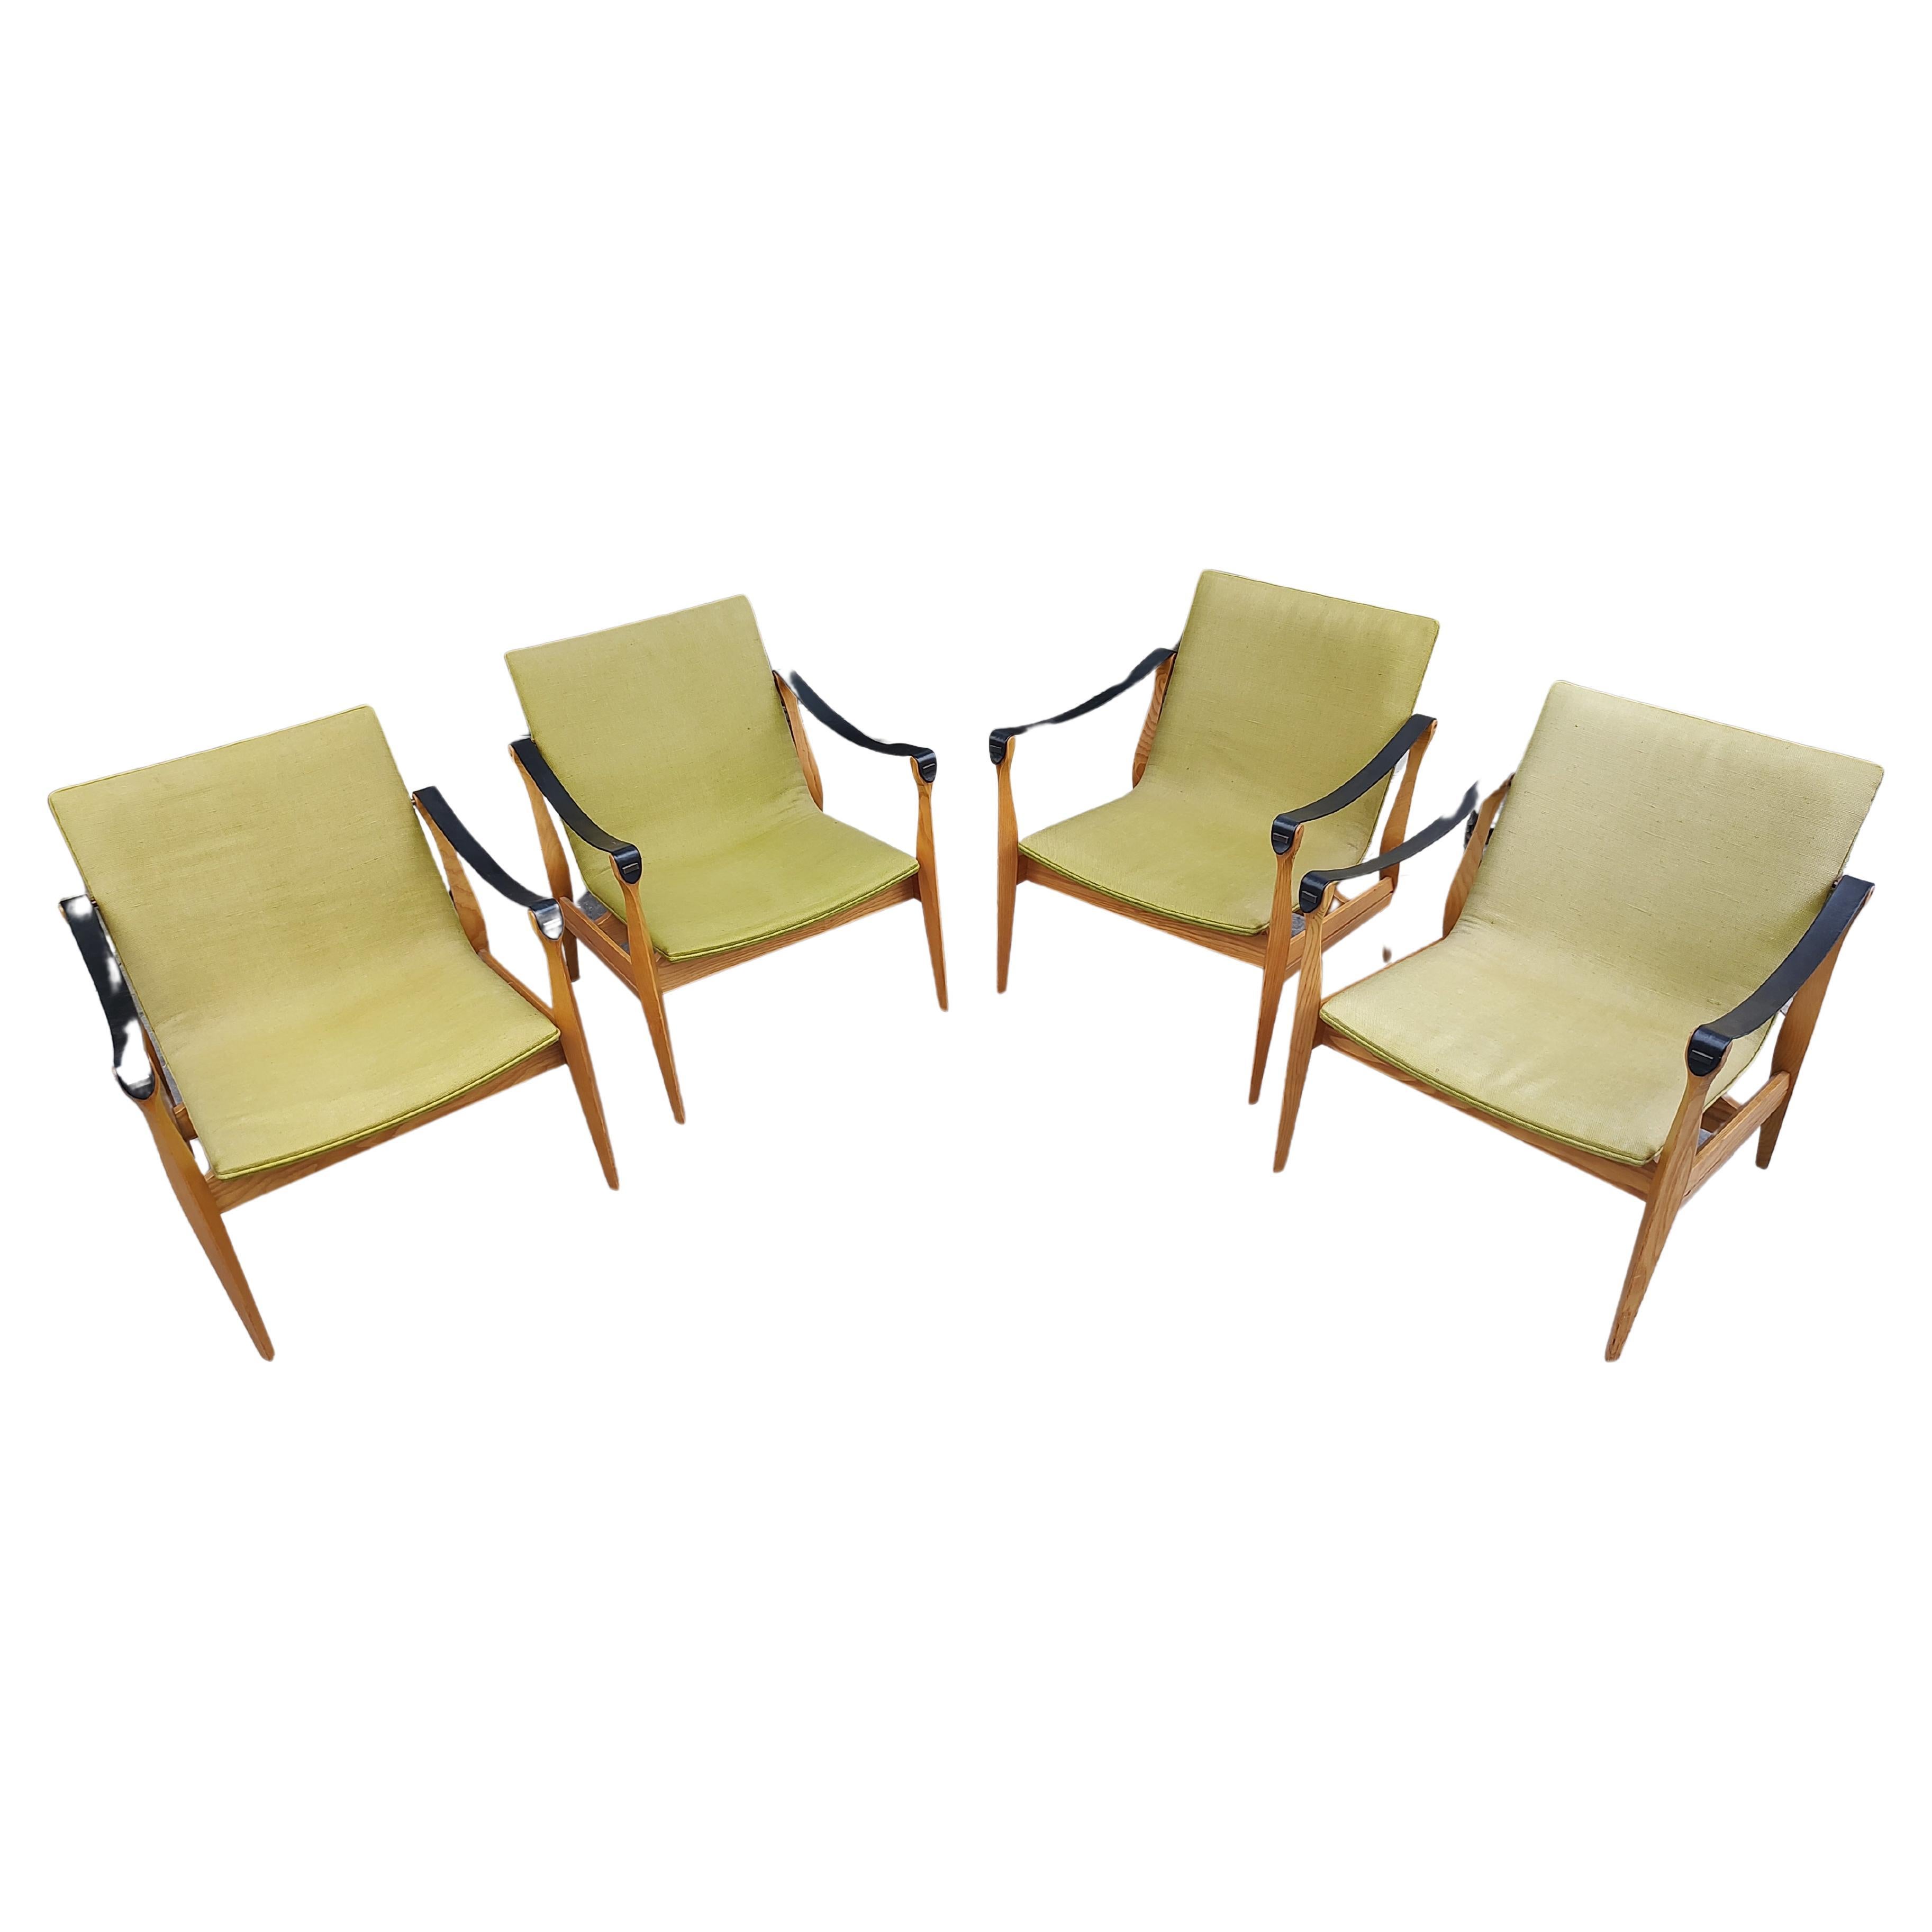 Polished Pair of Mid-Century Modern Safari Chairs by Karen & Ebbe Clemmensen 4 Hansen For Sale